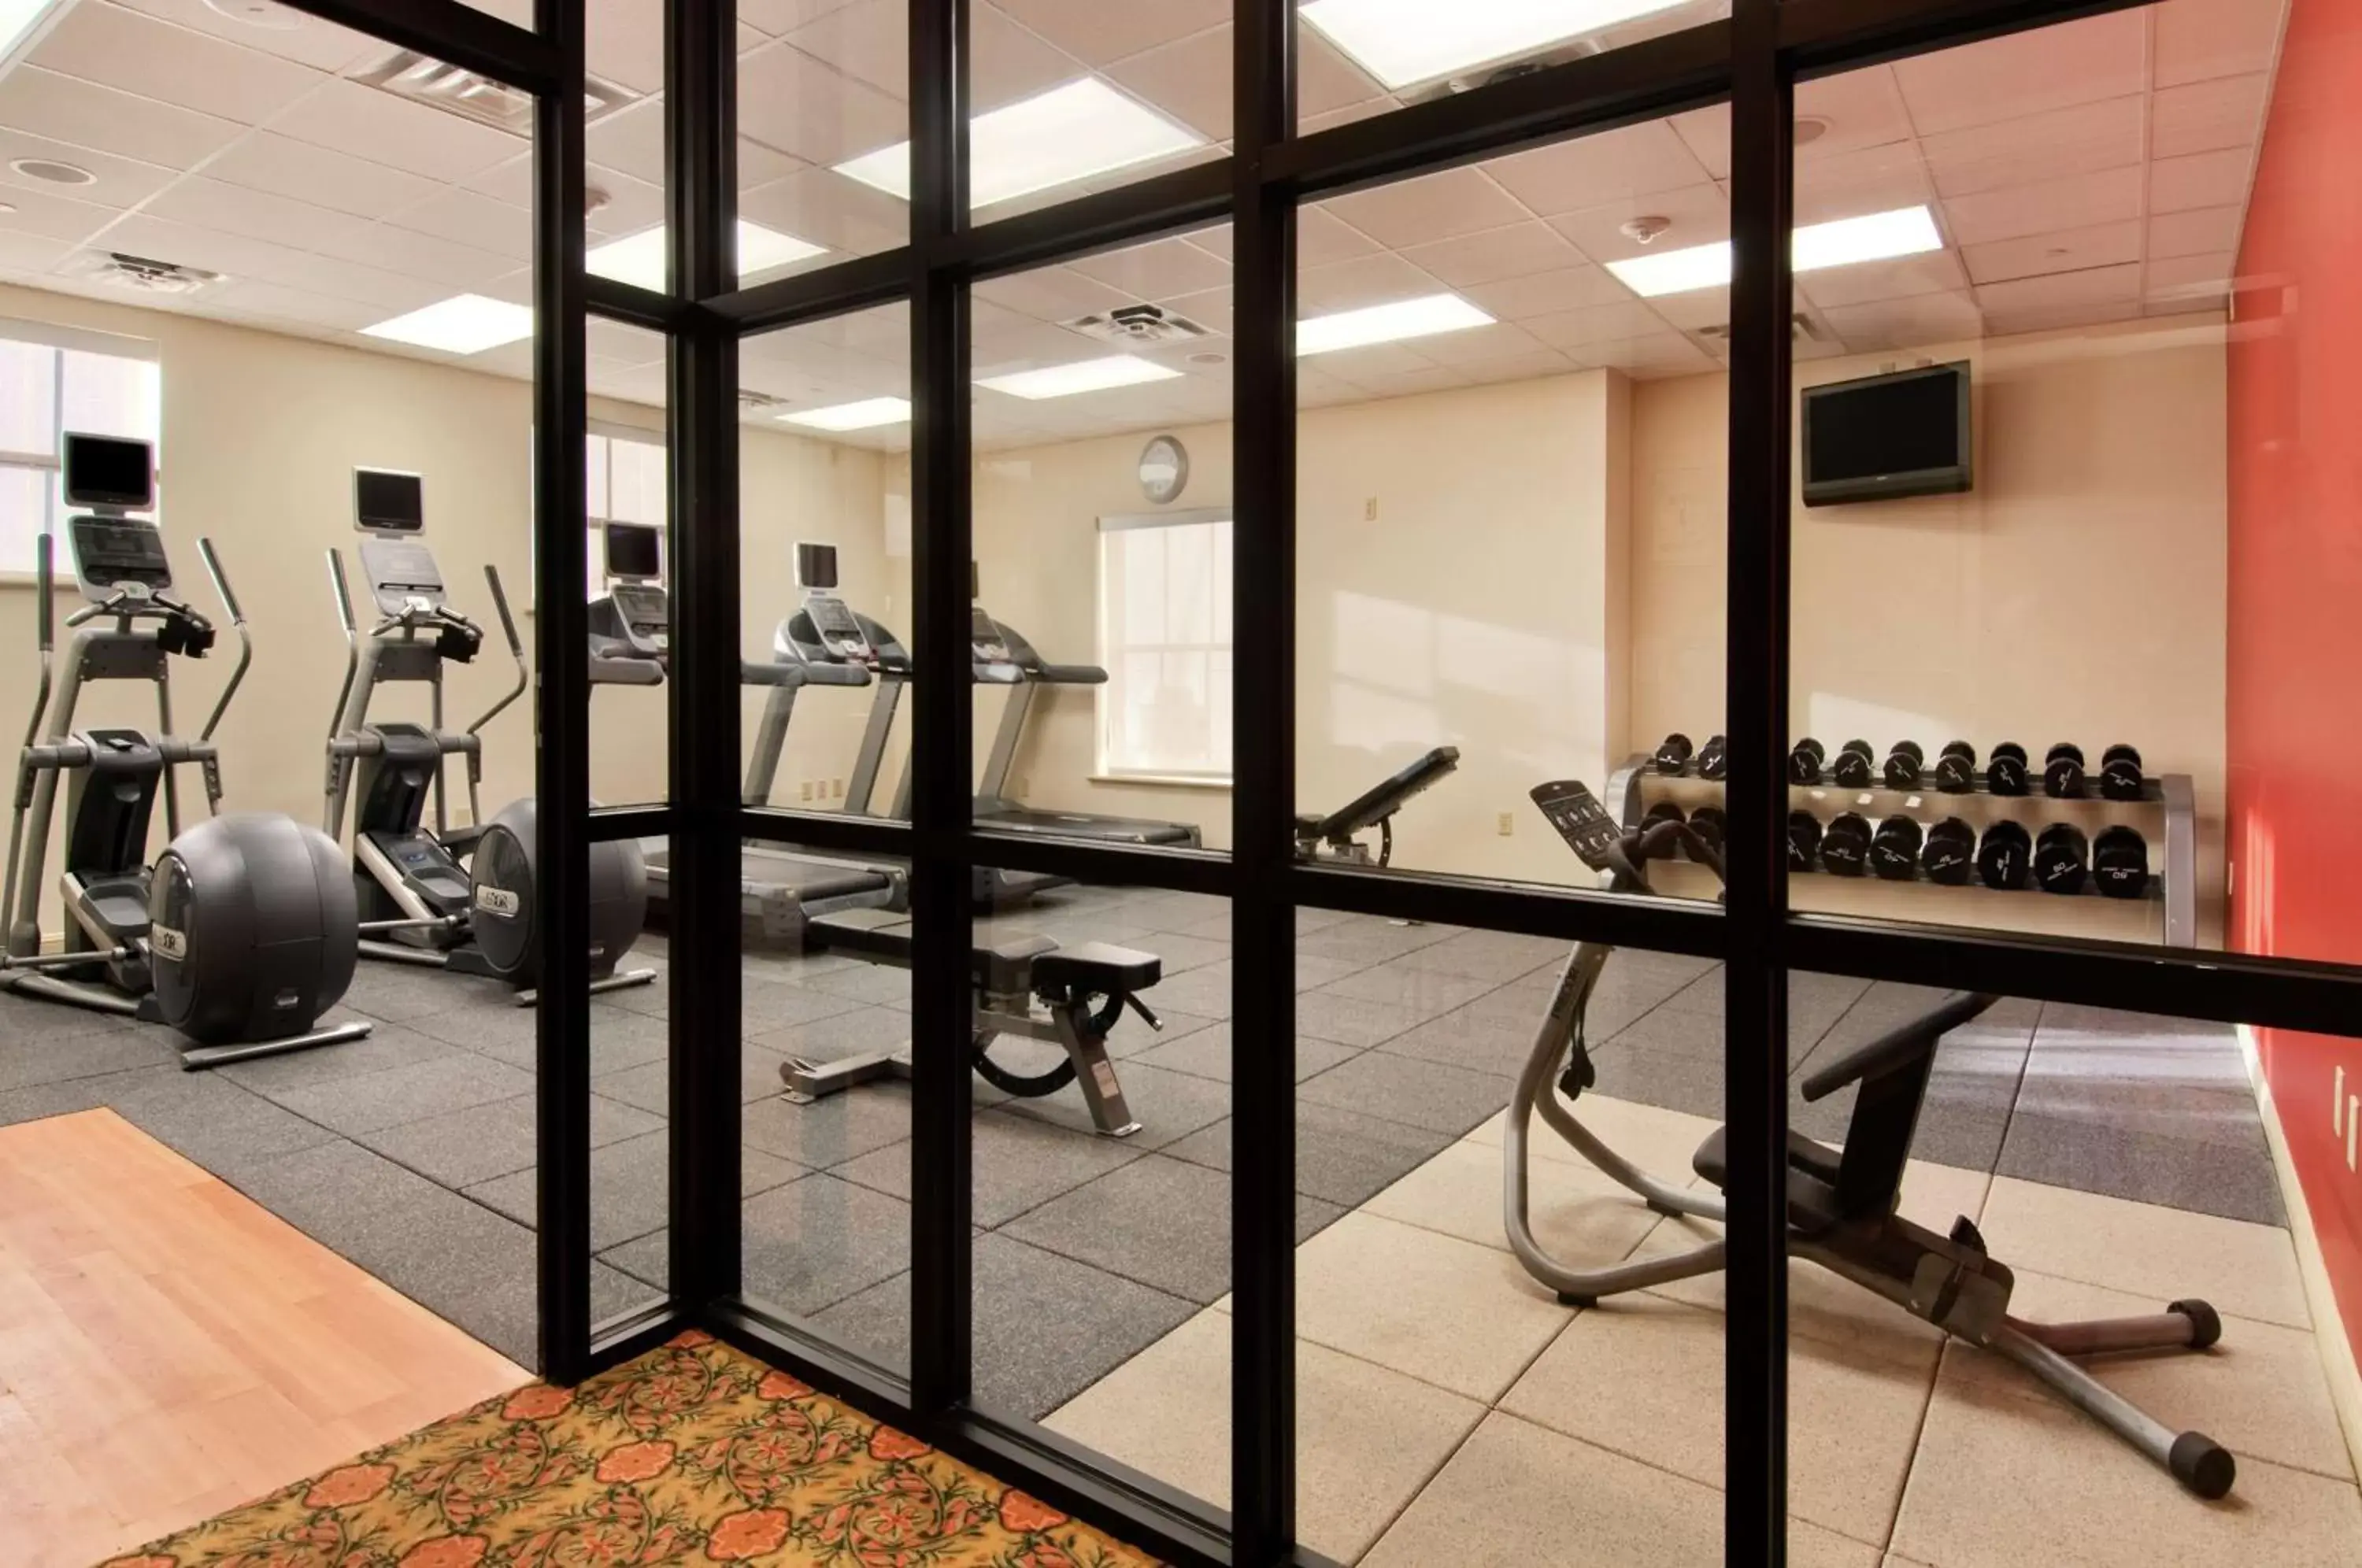 Fitness centre/facilities, Fitness Center/Facilities in Hilton Baton Rouge Capitol Center